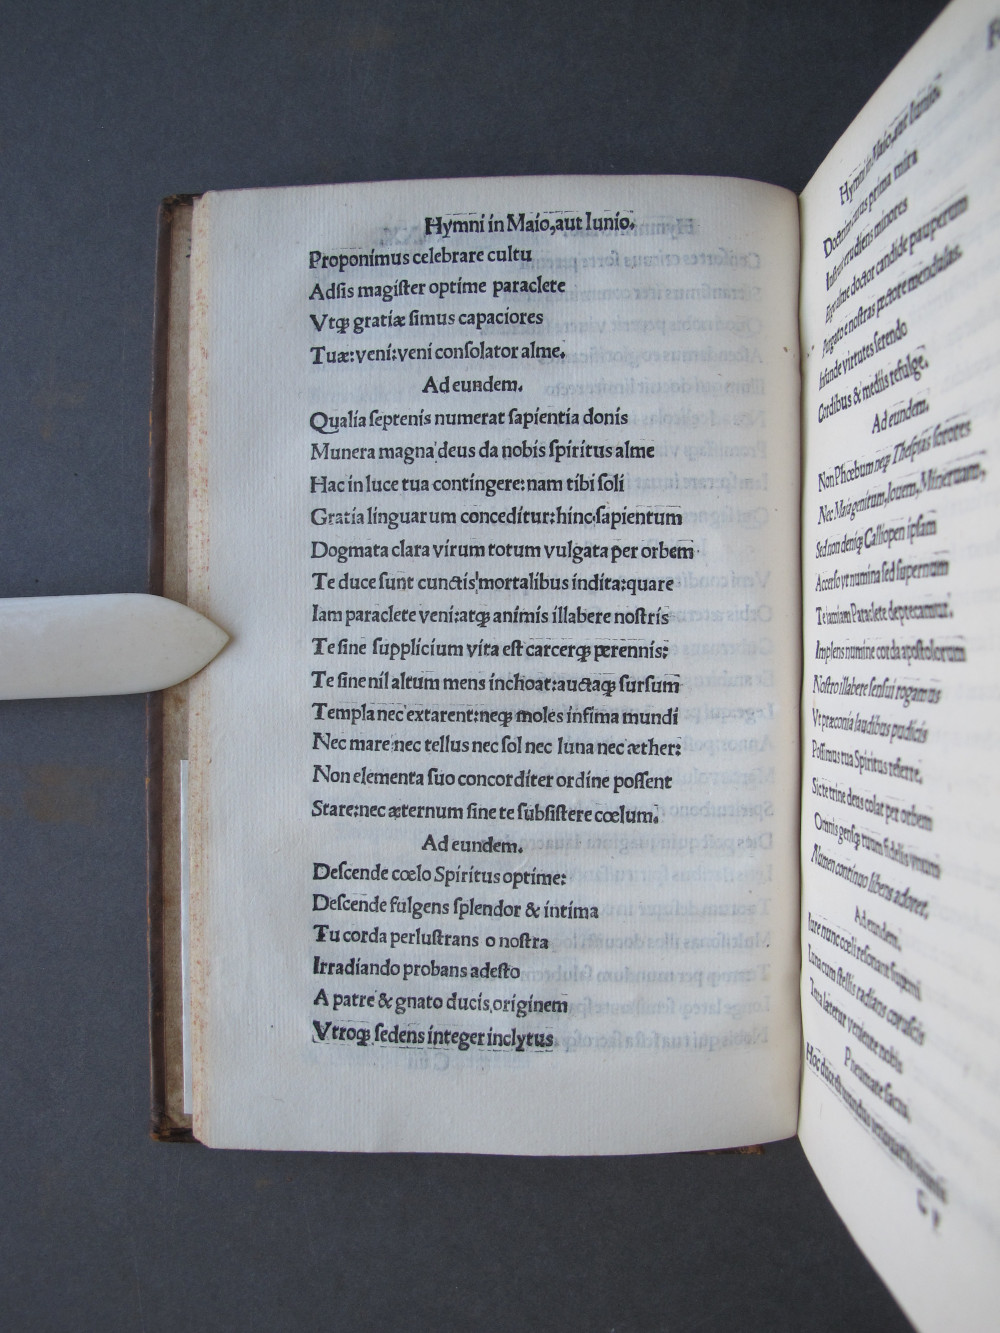 Folio 20 verso